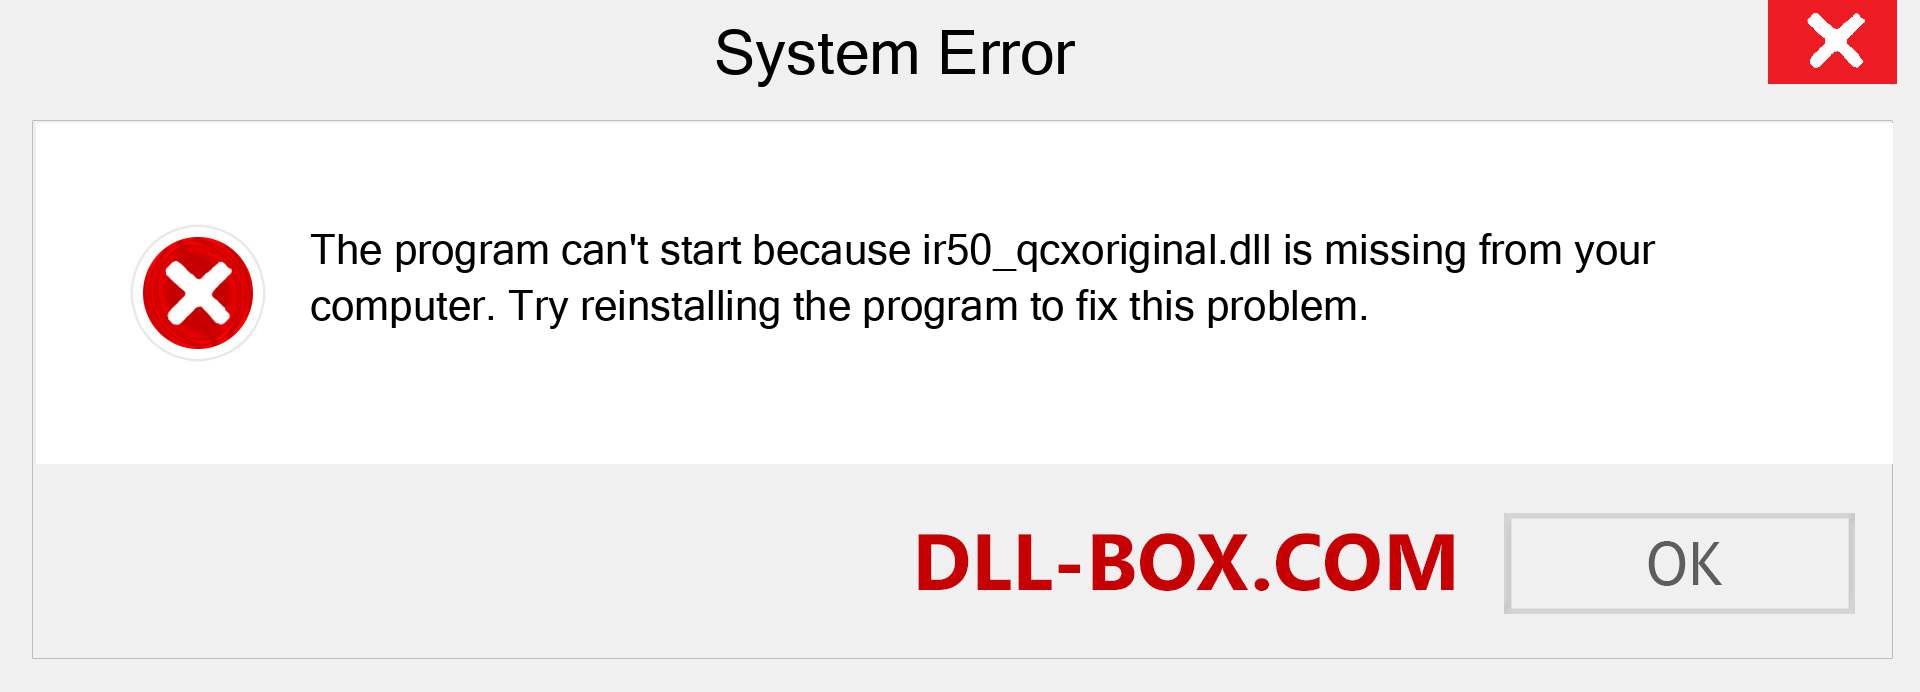  ir50_qcxoriginal.dll file is missing?. Download for Windows 7, 8, 10 - Fix  ir50_qcxoriginal dll Missing Error on Windows, photos, images